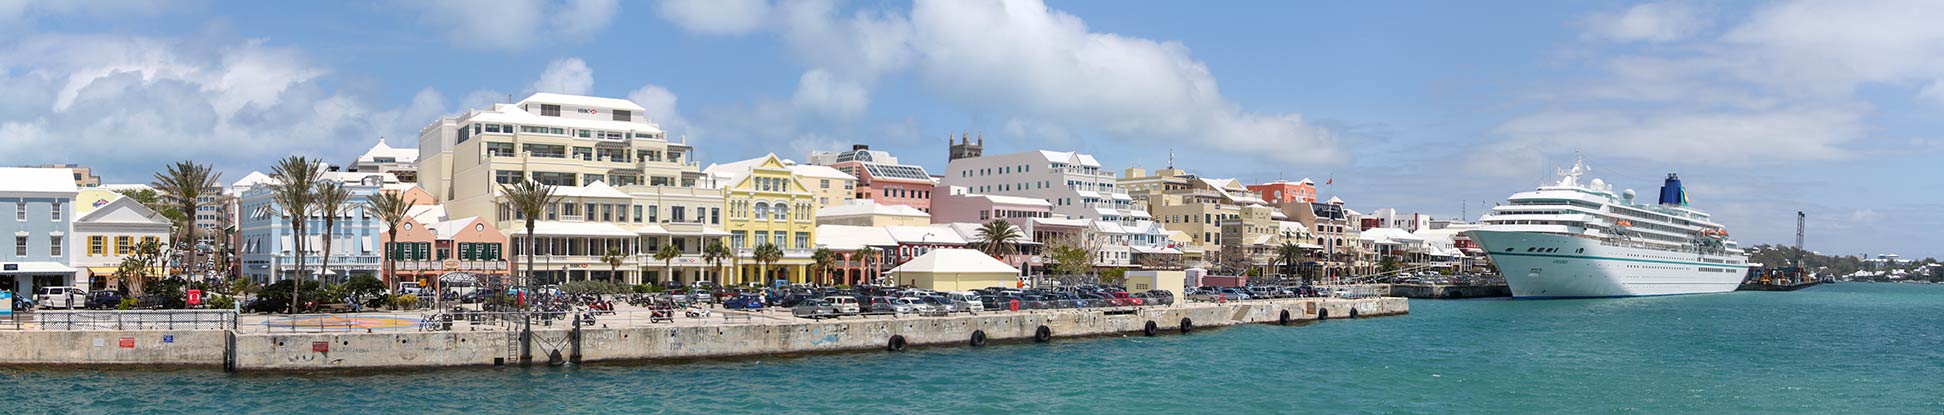 Hamilton Bermuda with cruiseship as seen from ferry